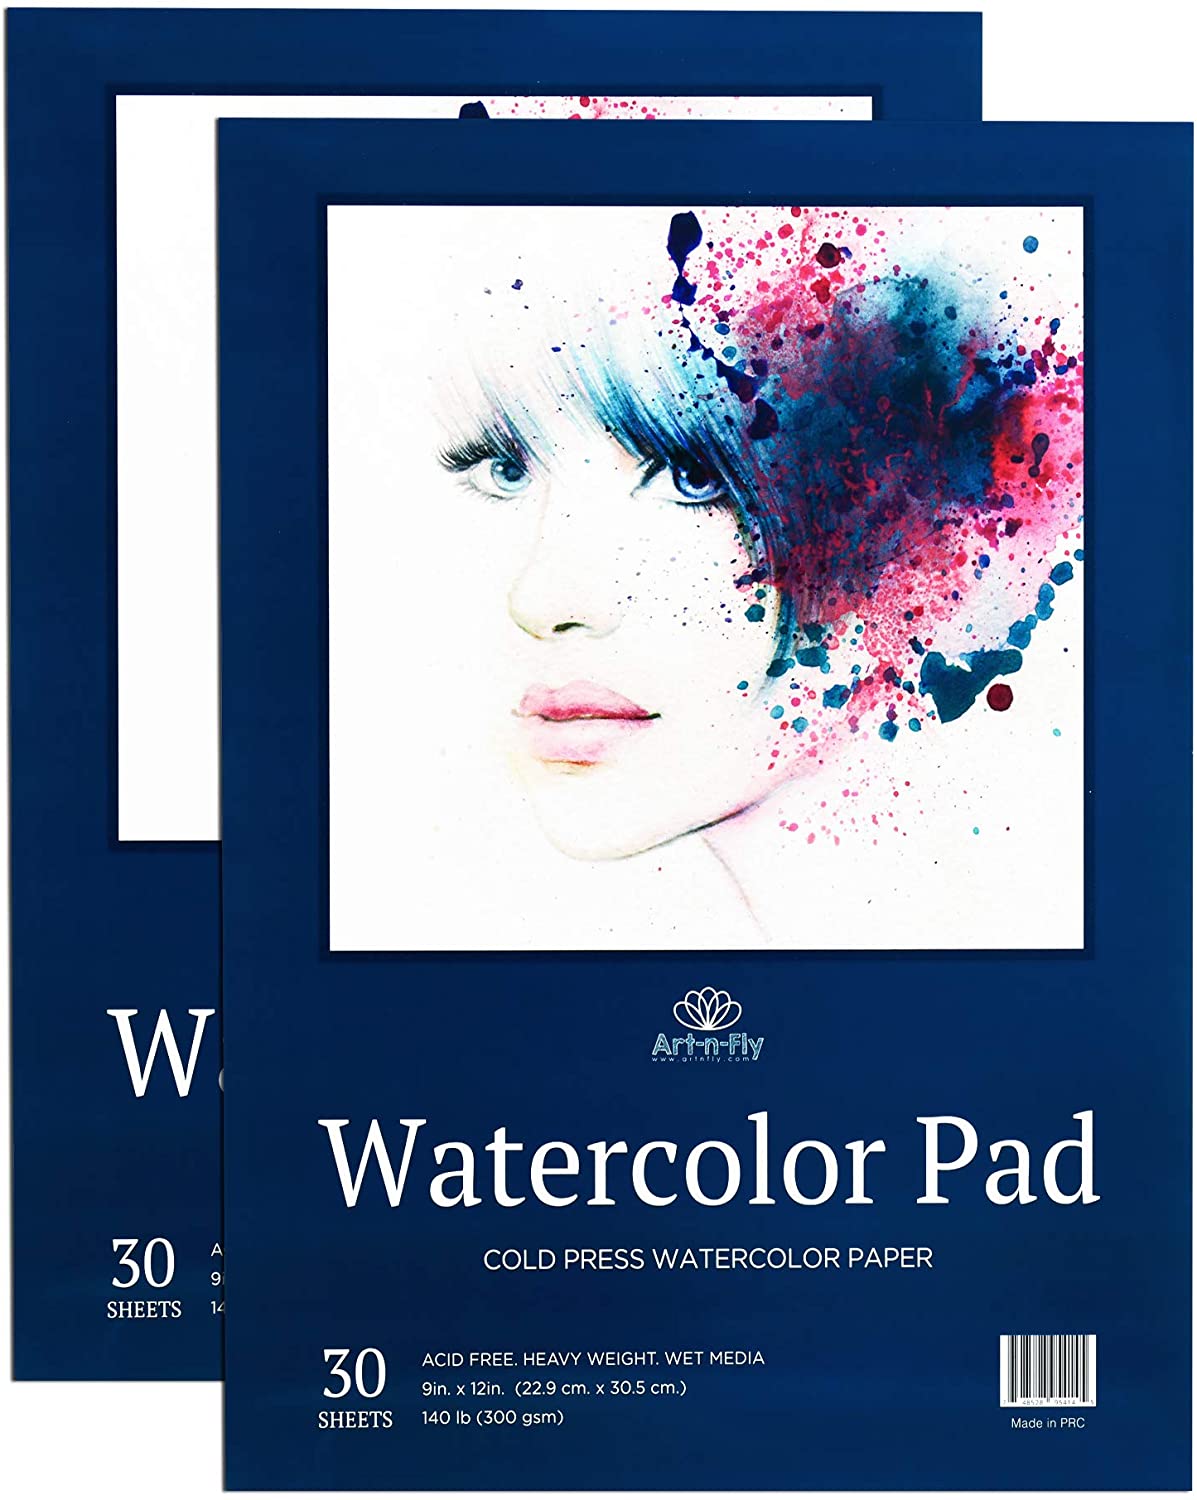 5-Pack Artistico Watercolour Paper - 140 lb